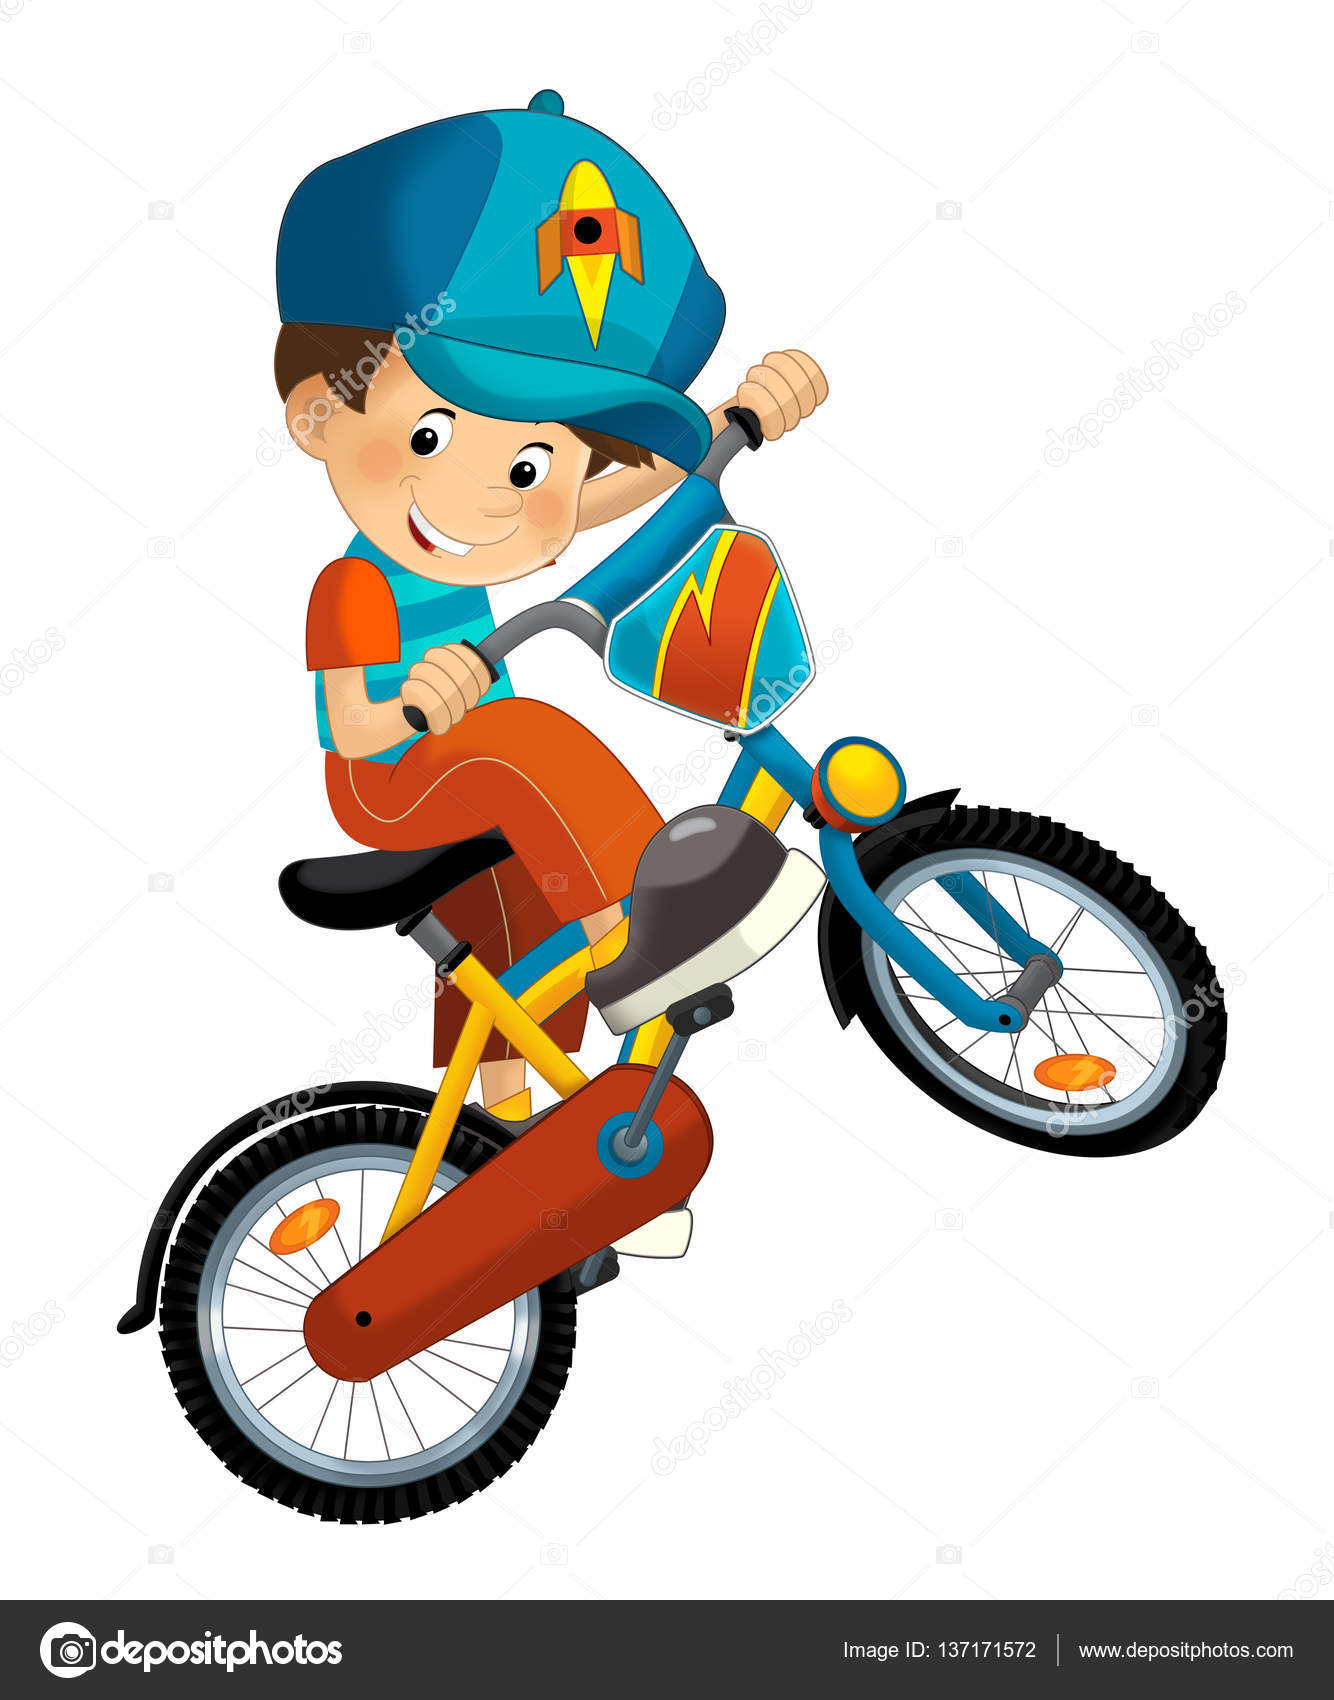 Cartoon boy on the bicycle Stock Photo by ©illustrator_hft 137171572